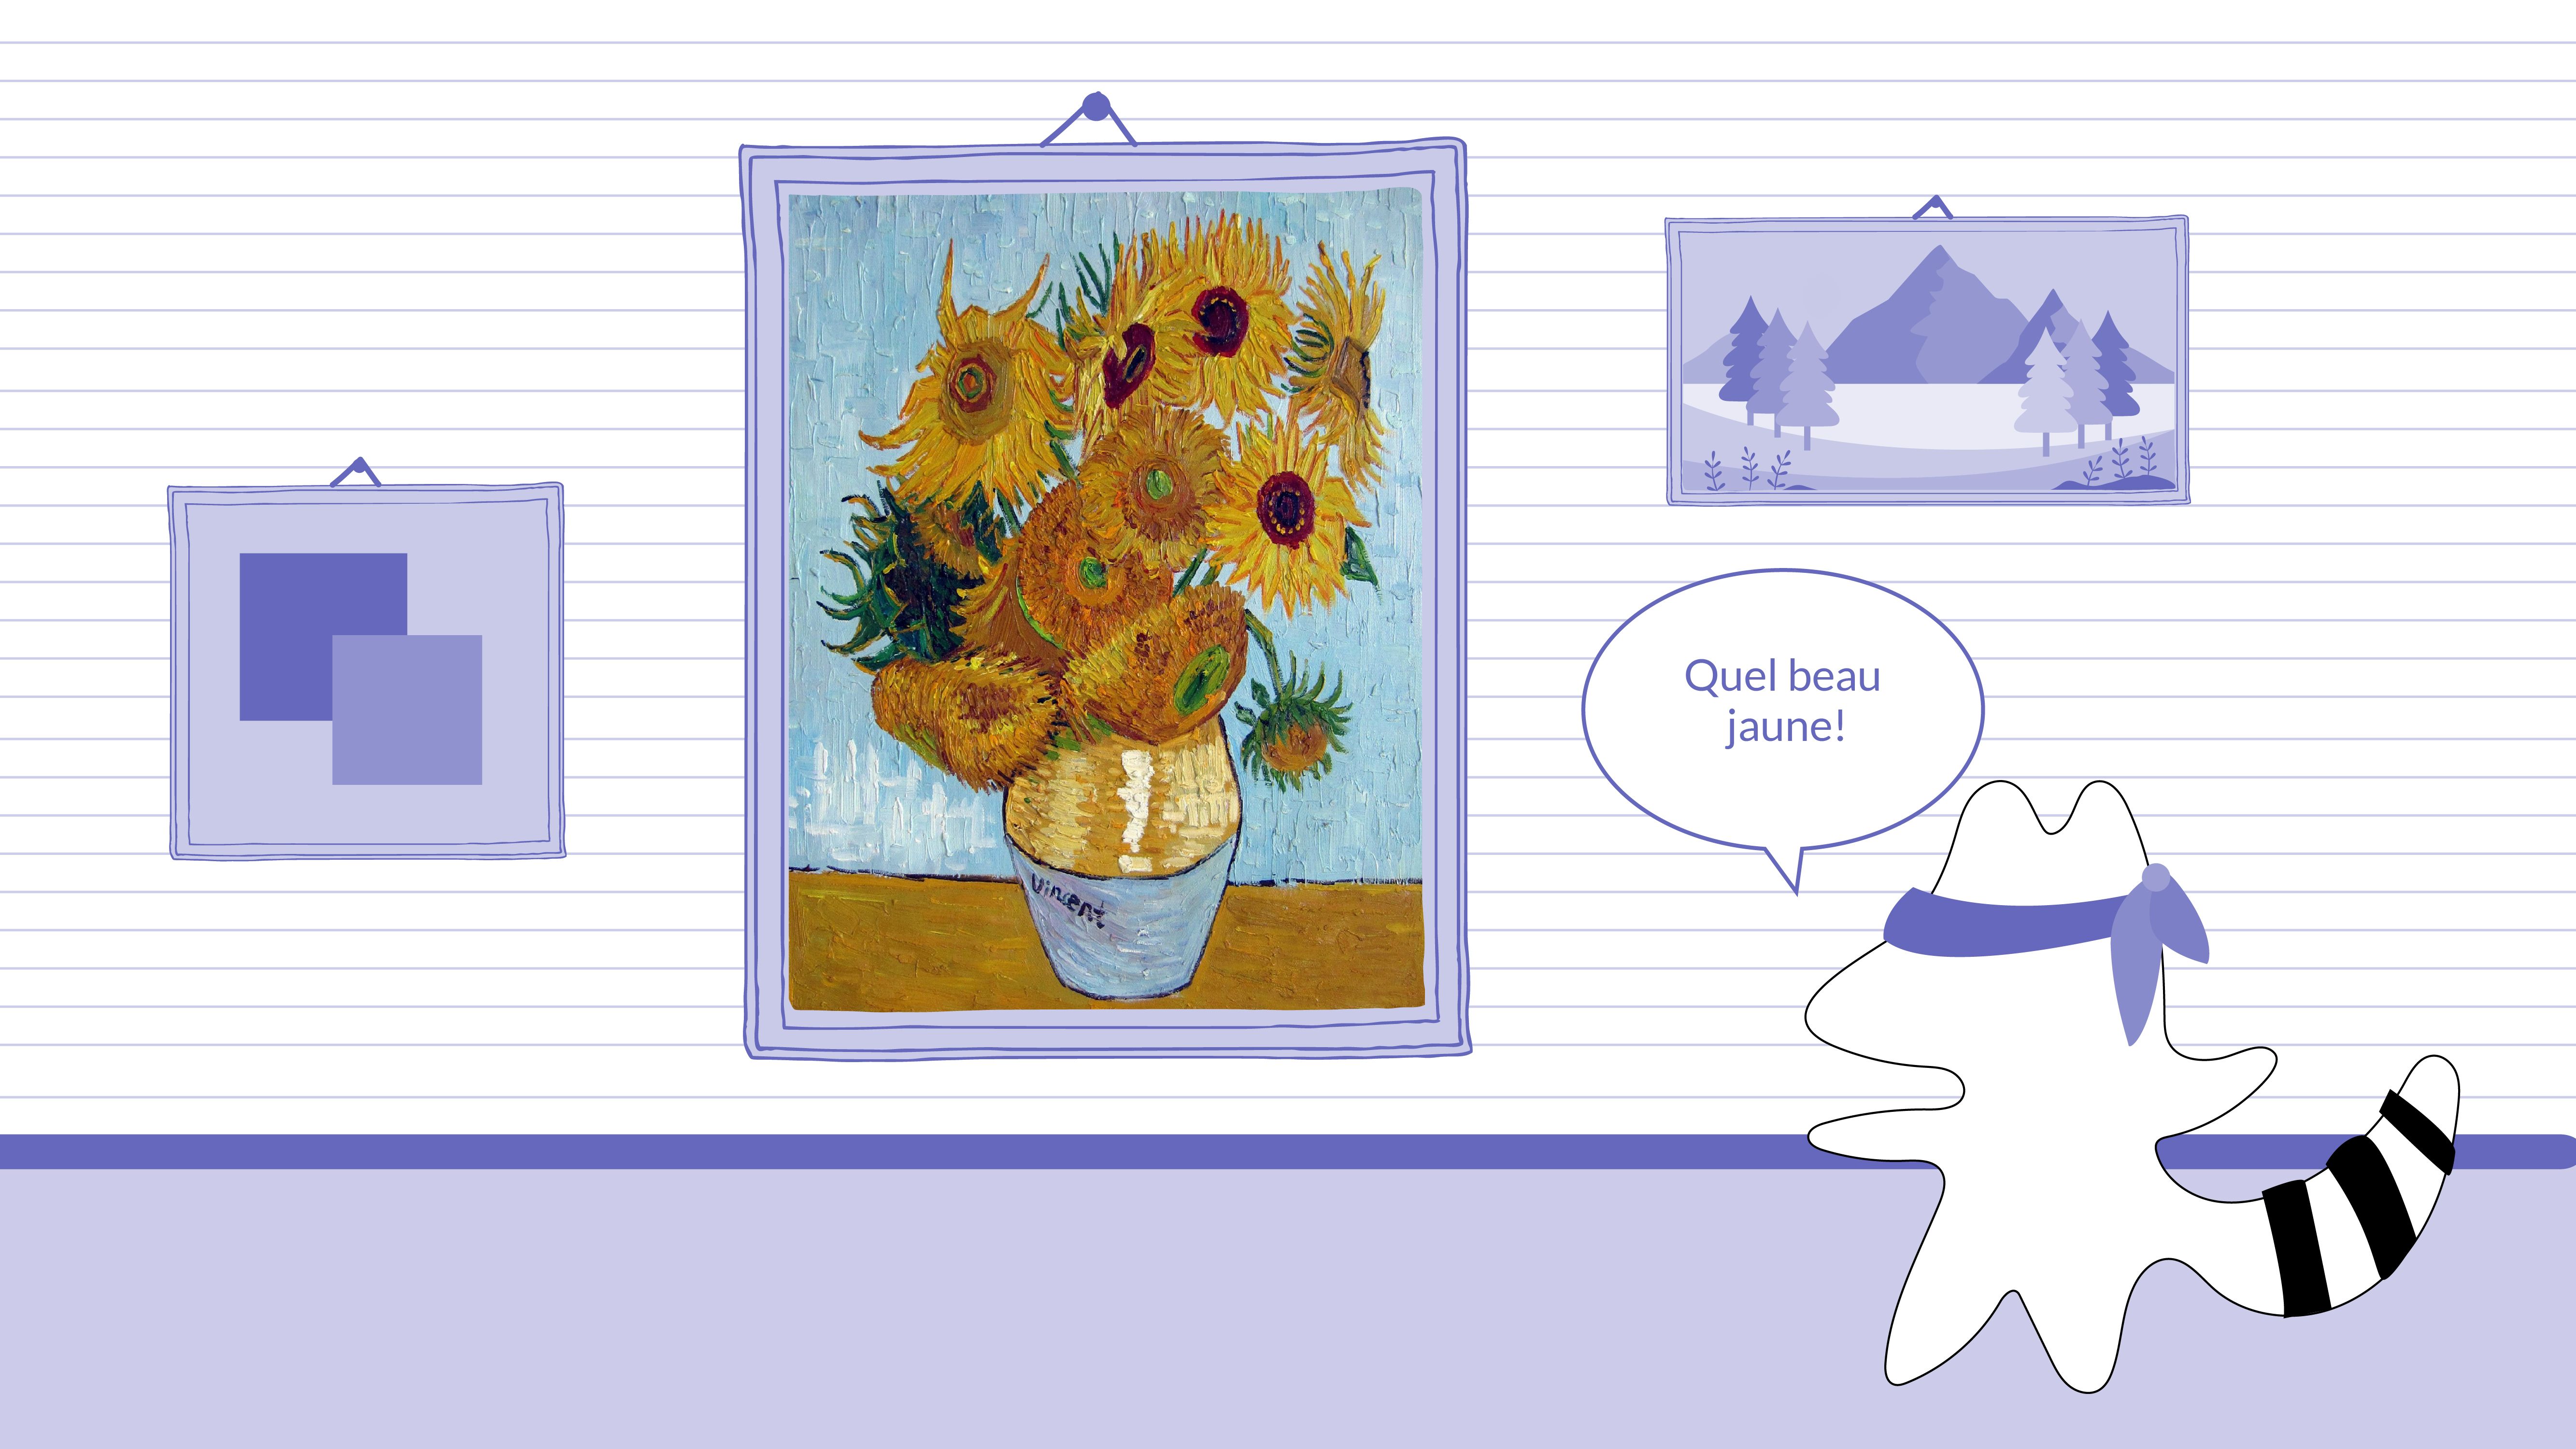 Iggy looks at Van Gogh’s Sunflowers painting, thinking, “Quel beau jaune!”